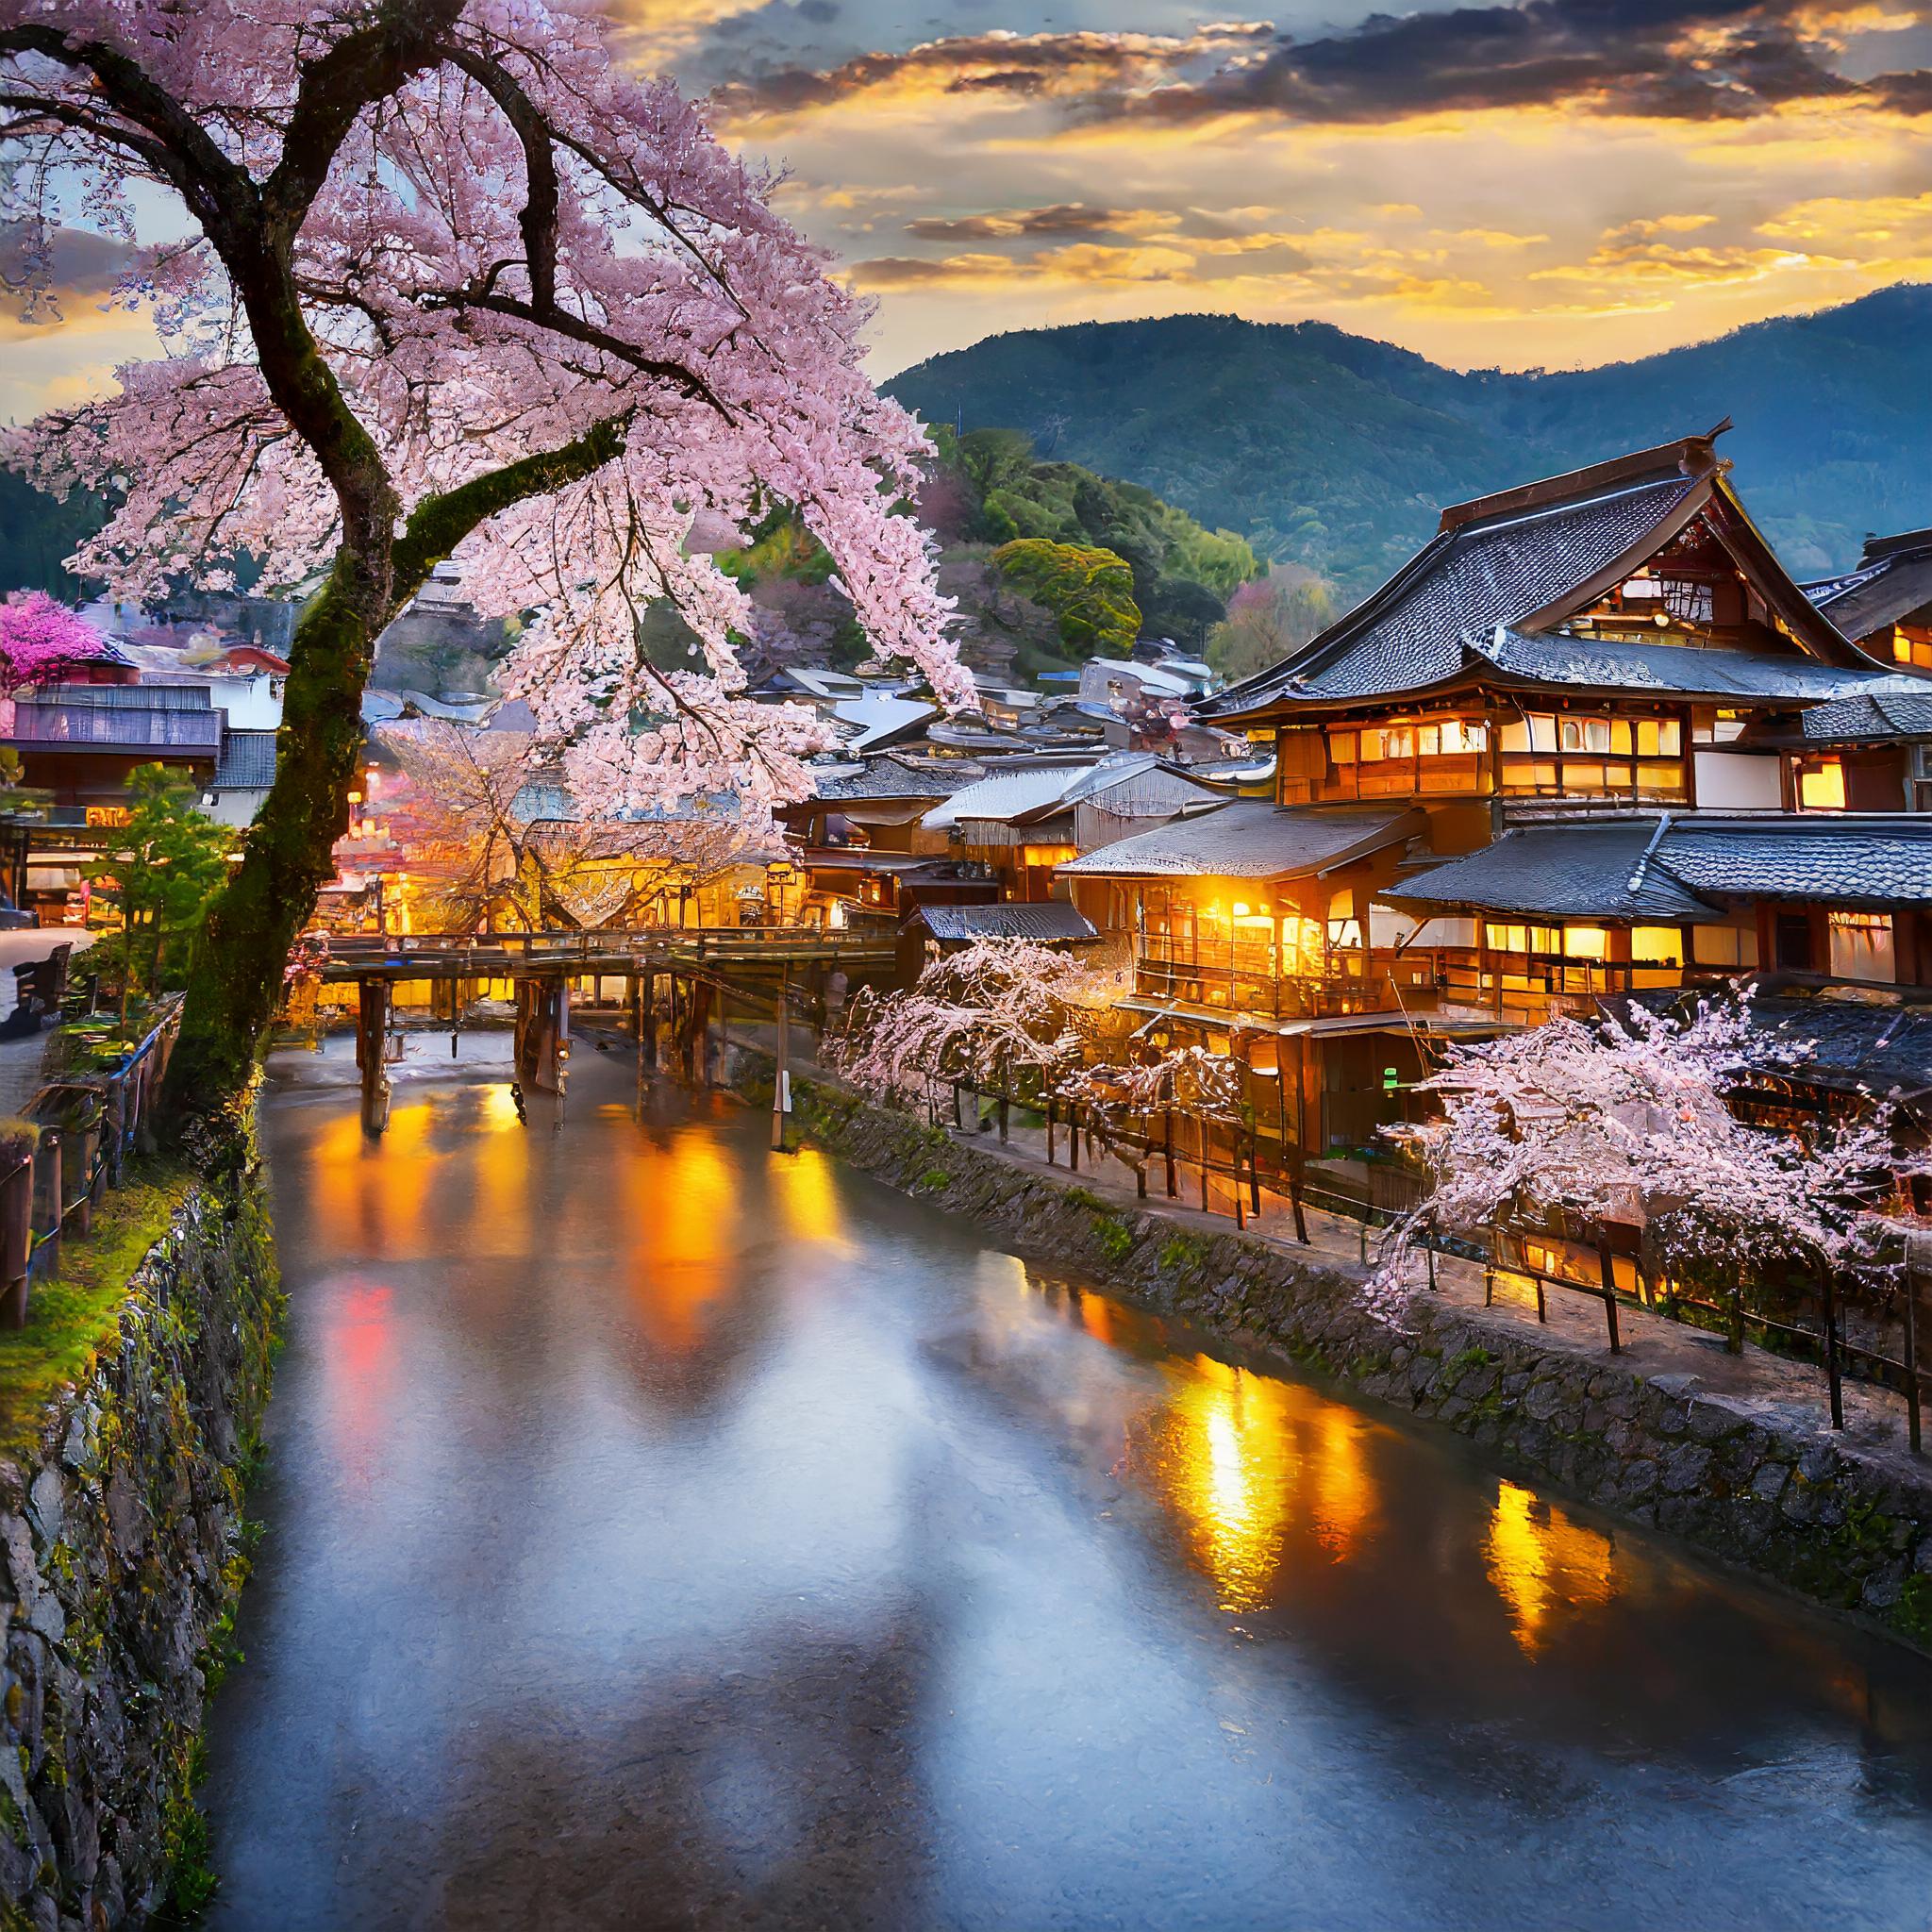  Firefly beautiful kyoto japan, village houses, sunset, magnificent view, sakura trees, amazing light.jpg